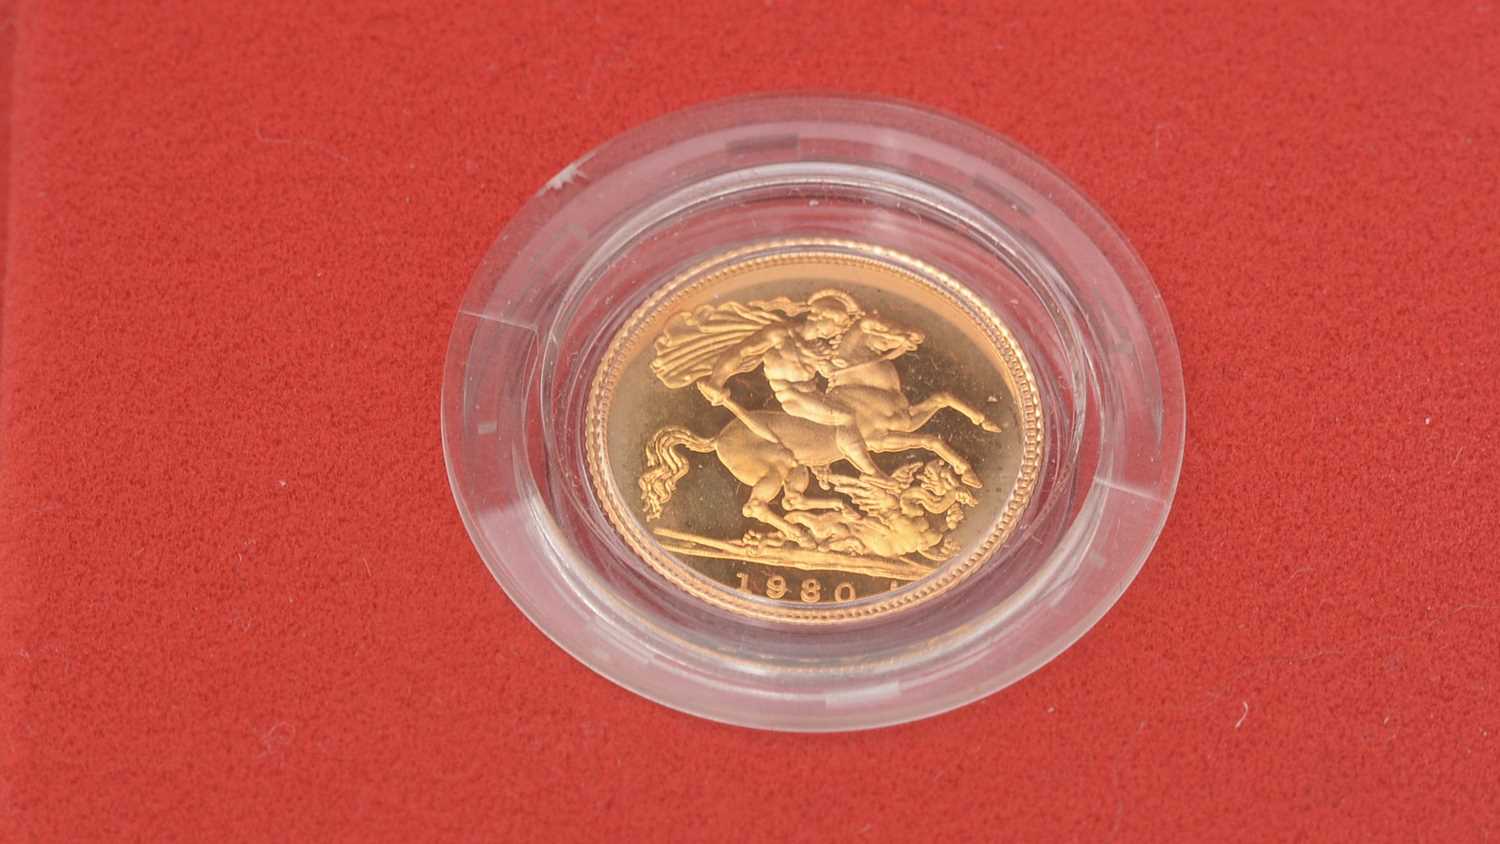 Lot 164 - Royal Mint proof half sovereign, 1980